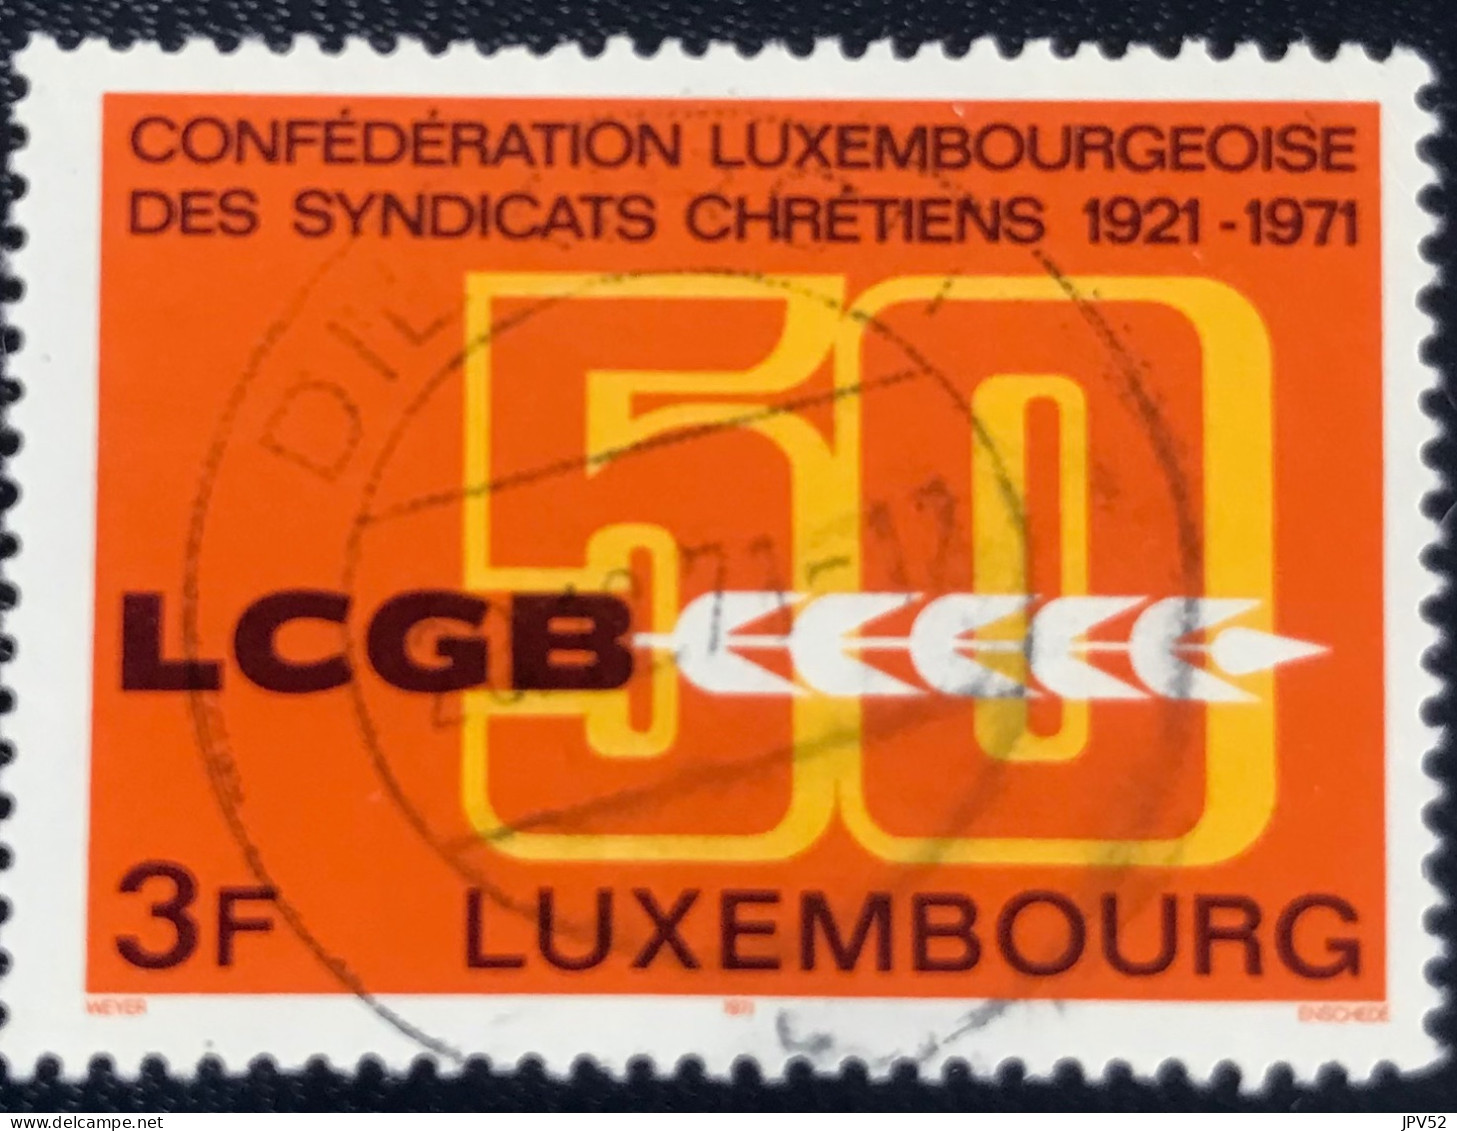 Luxembourg - Luxemburg - C18/31 - 1971 - (°)used - Michel 827 - LCGB Embleem - Usados